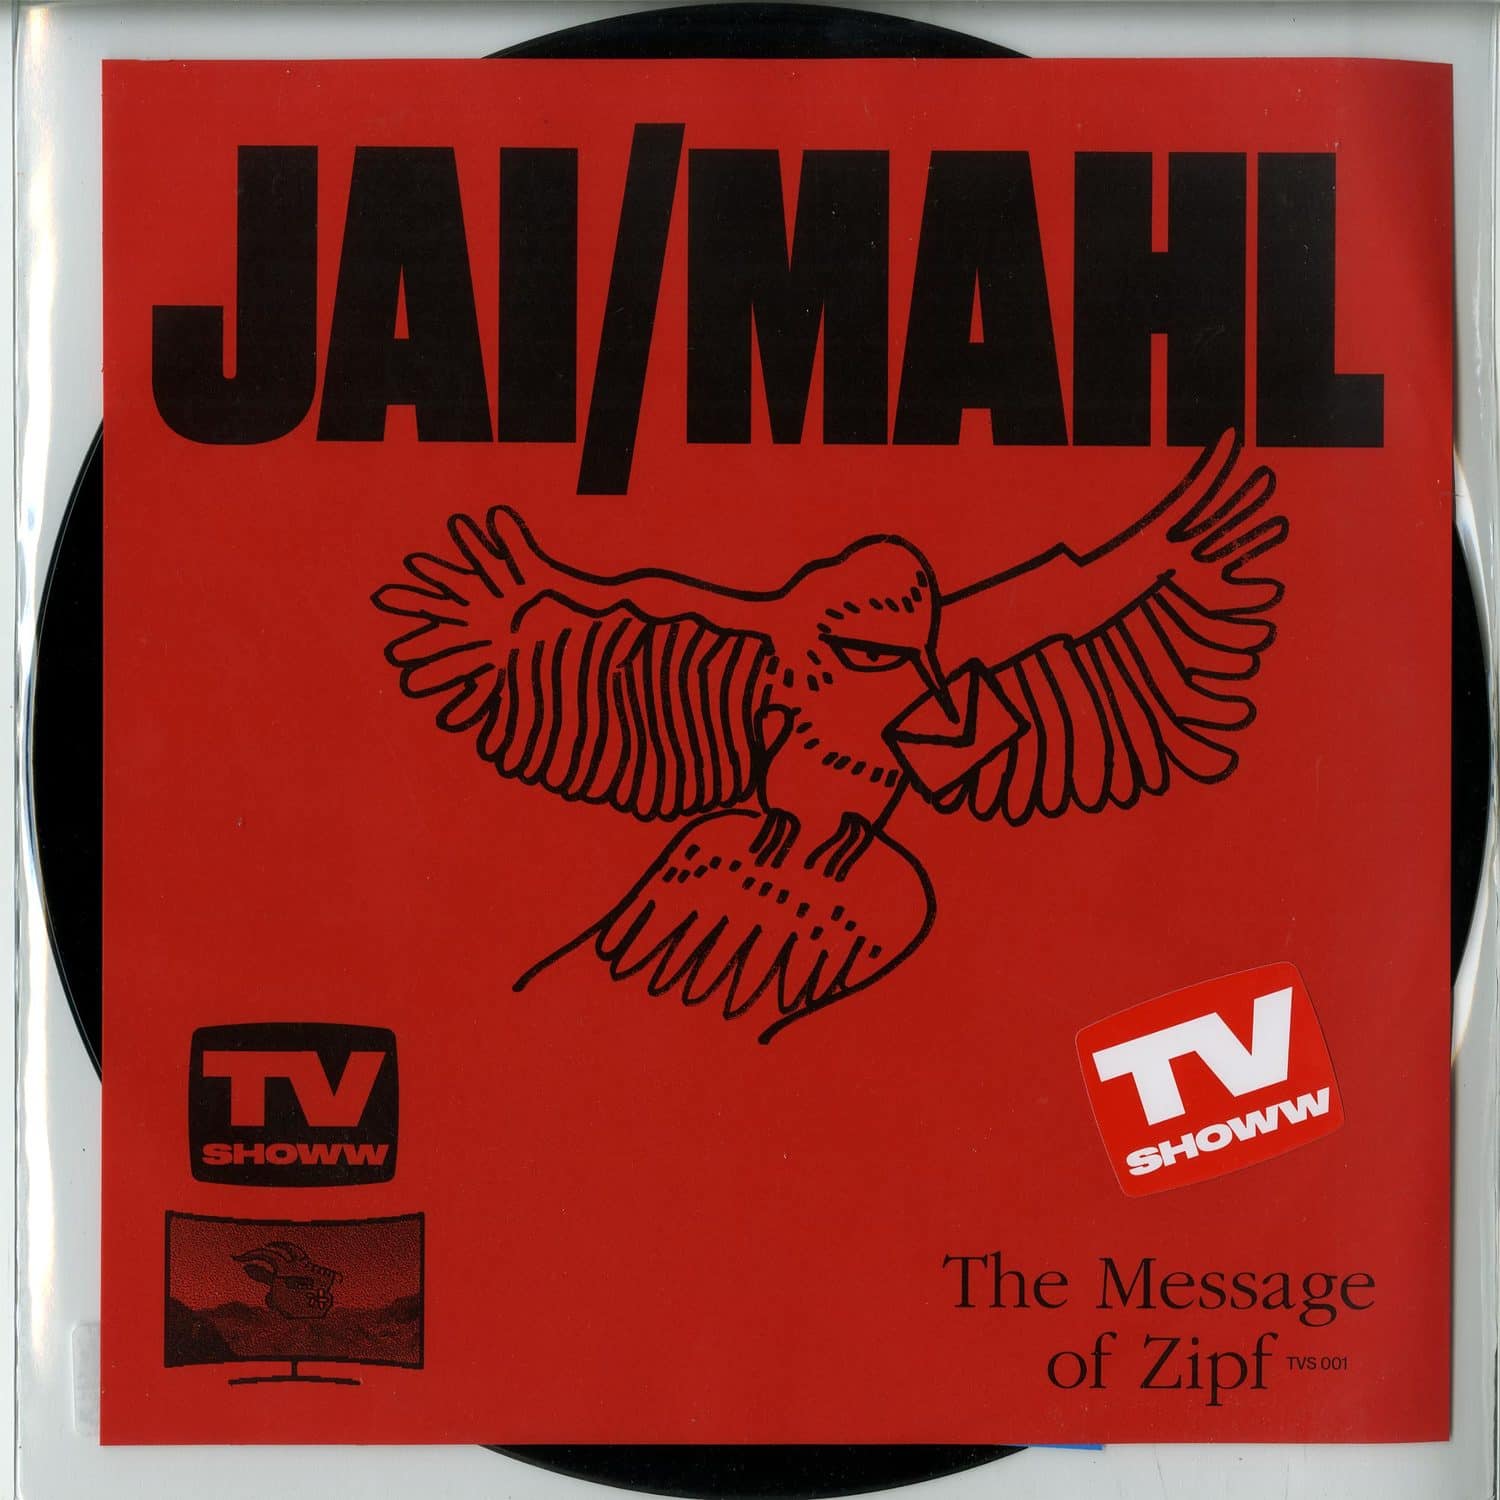 JAI/MAHL aka Jamal Moss - THE MESSAGE OF ZIPF